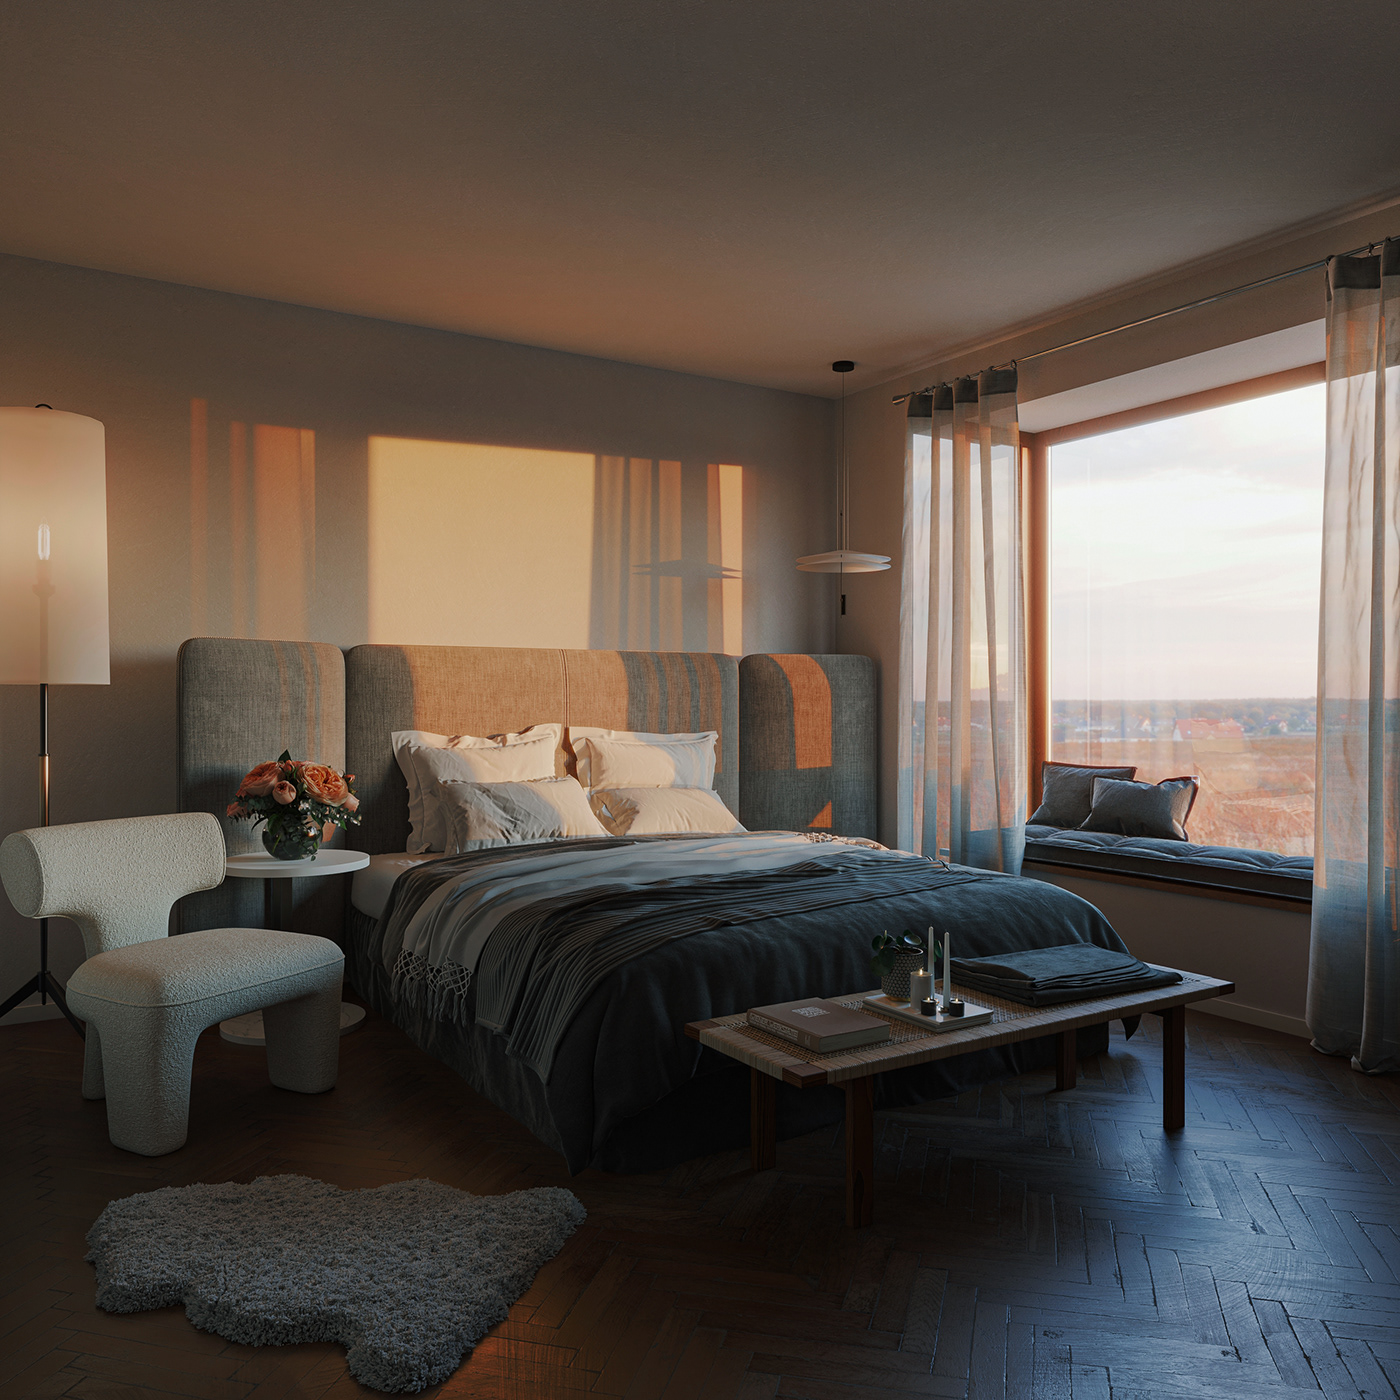 3ds max architecture archviz bedroom CGI corona interior design  Render visualization